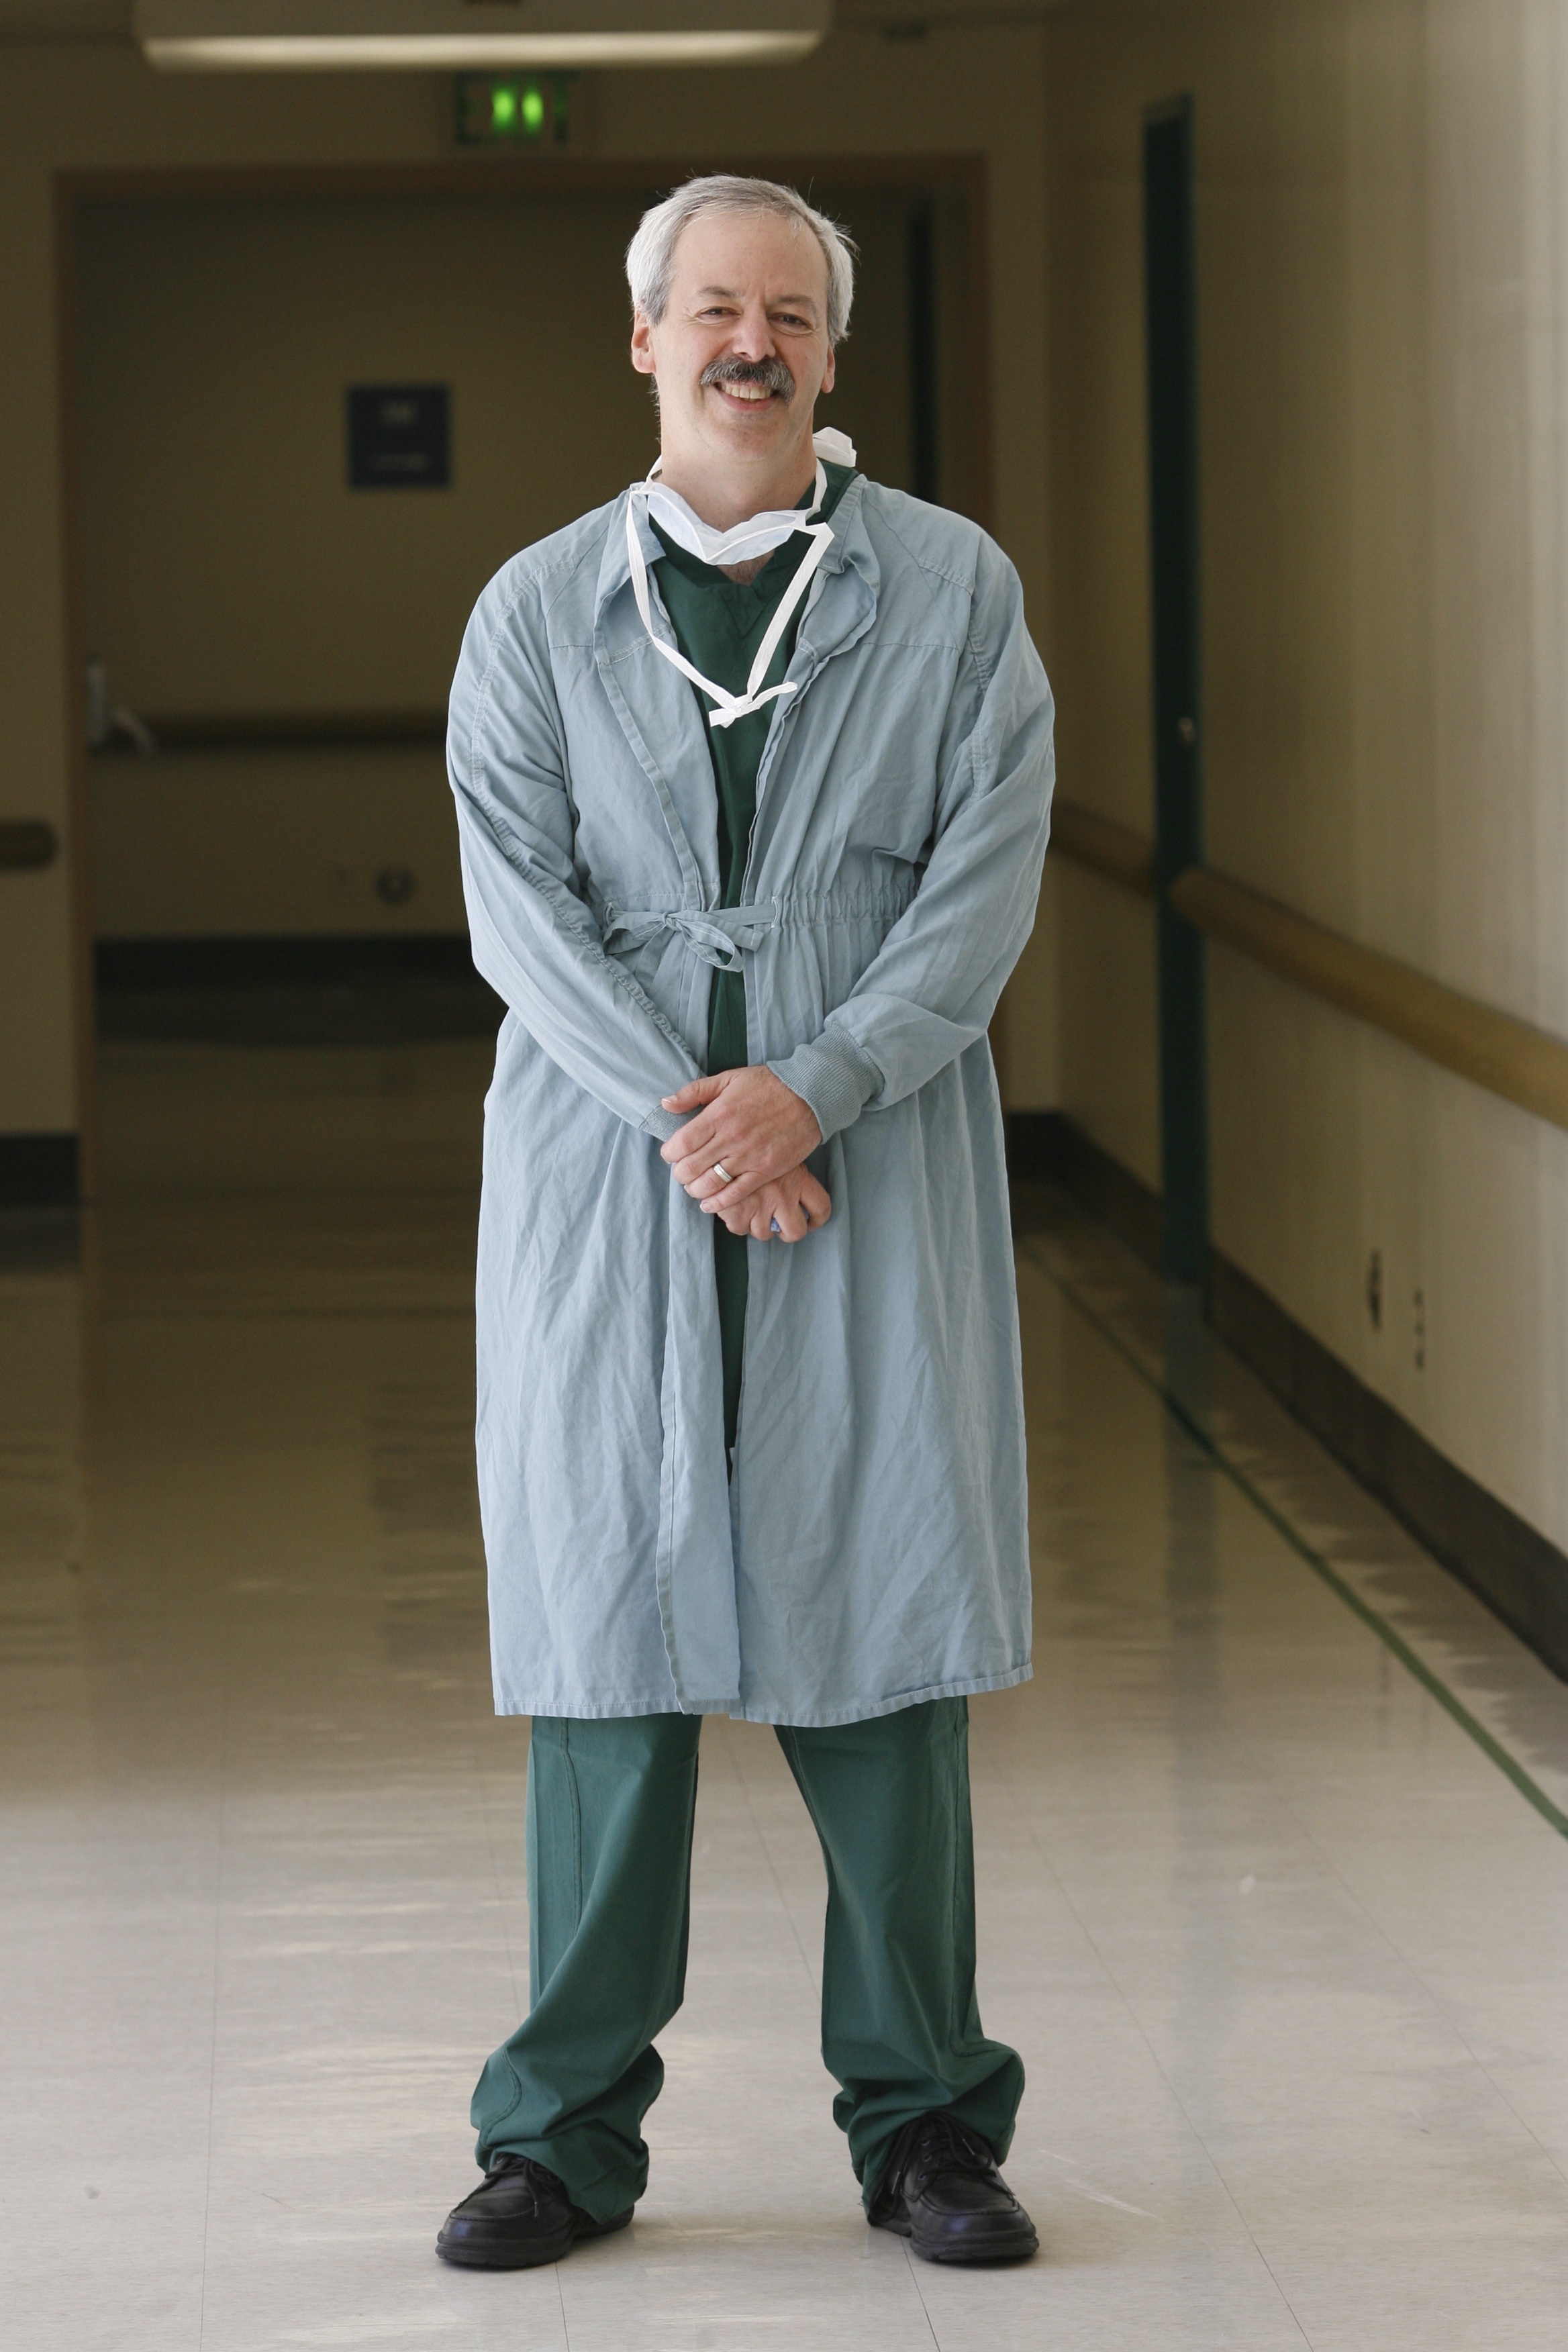 Jim Marks, MD, PhD, standing in the hallway at Zuckerberg San Francisco General Hospital. Photo Courtesy Brant Ward.